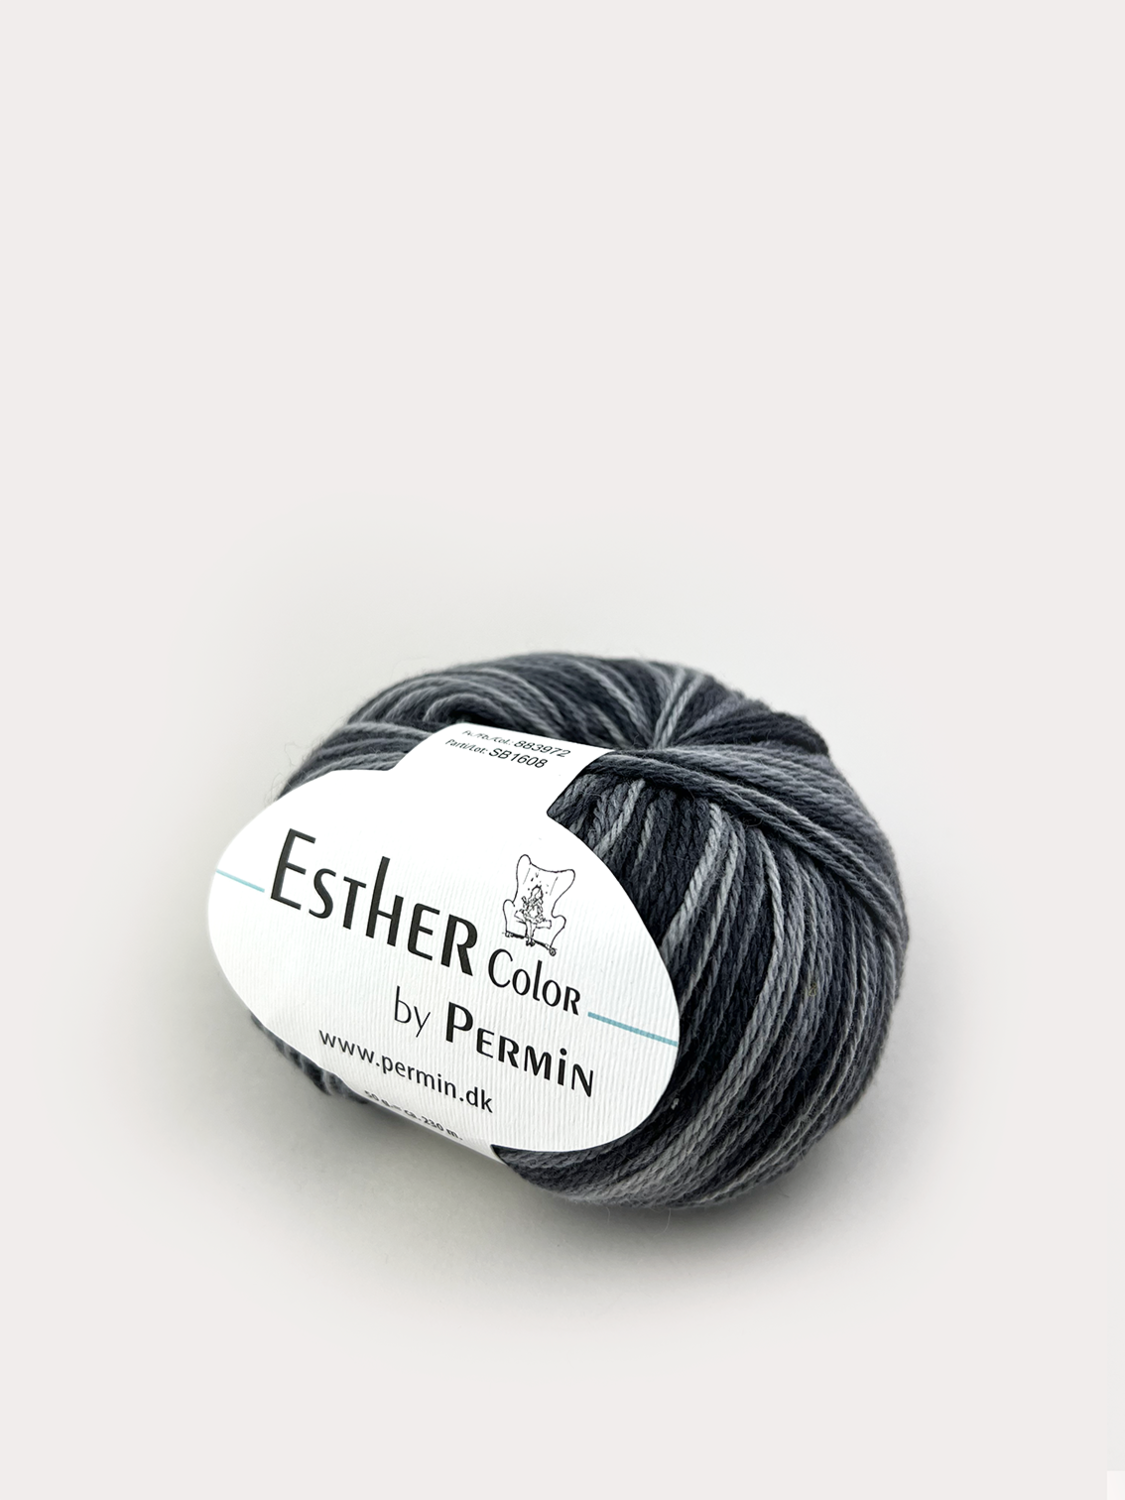 Esther Color black/grey20x50gr - Carl J. Permin A/S